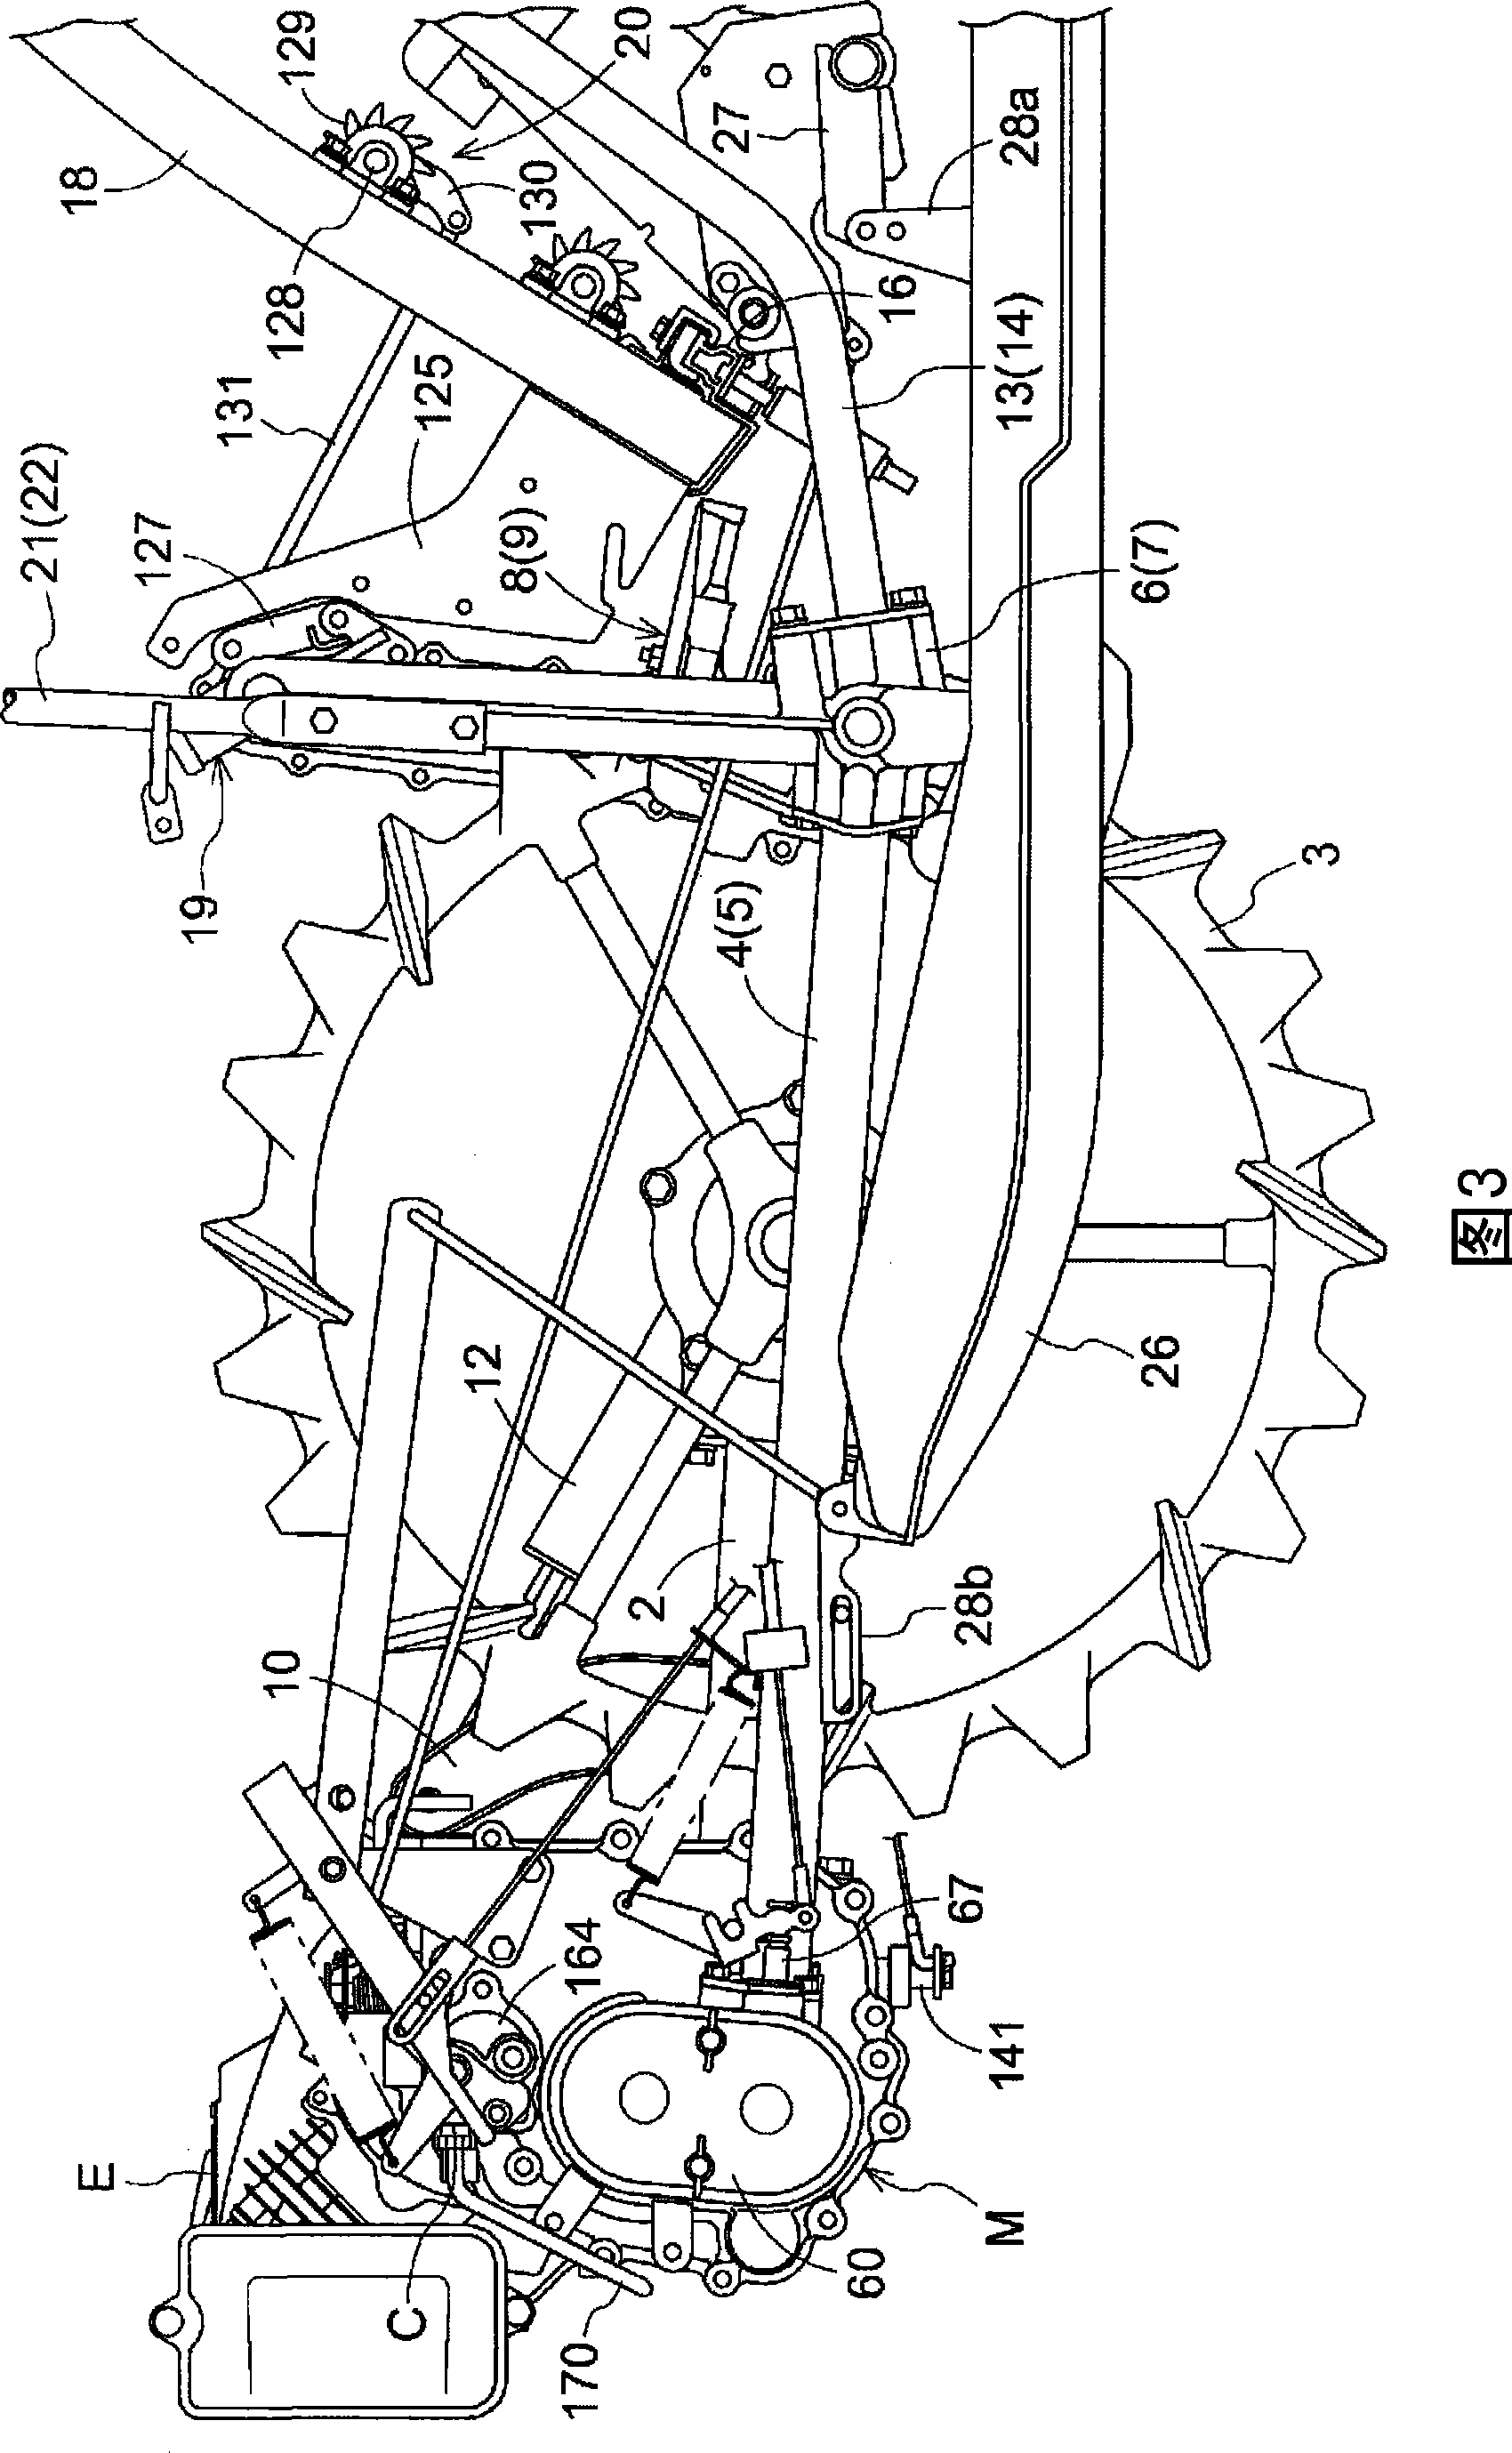 Transmission mechanism of walk-behind type paddy-field work machine